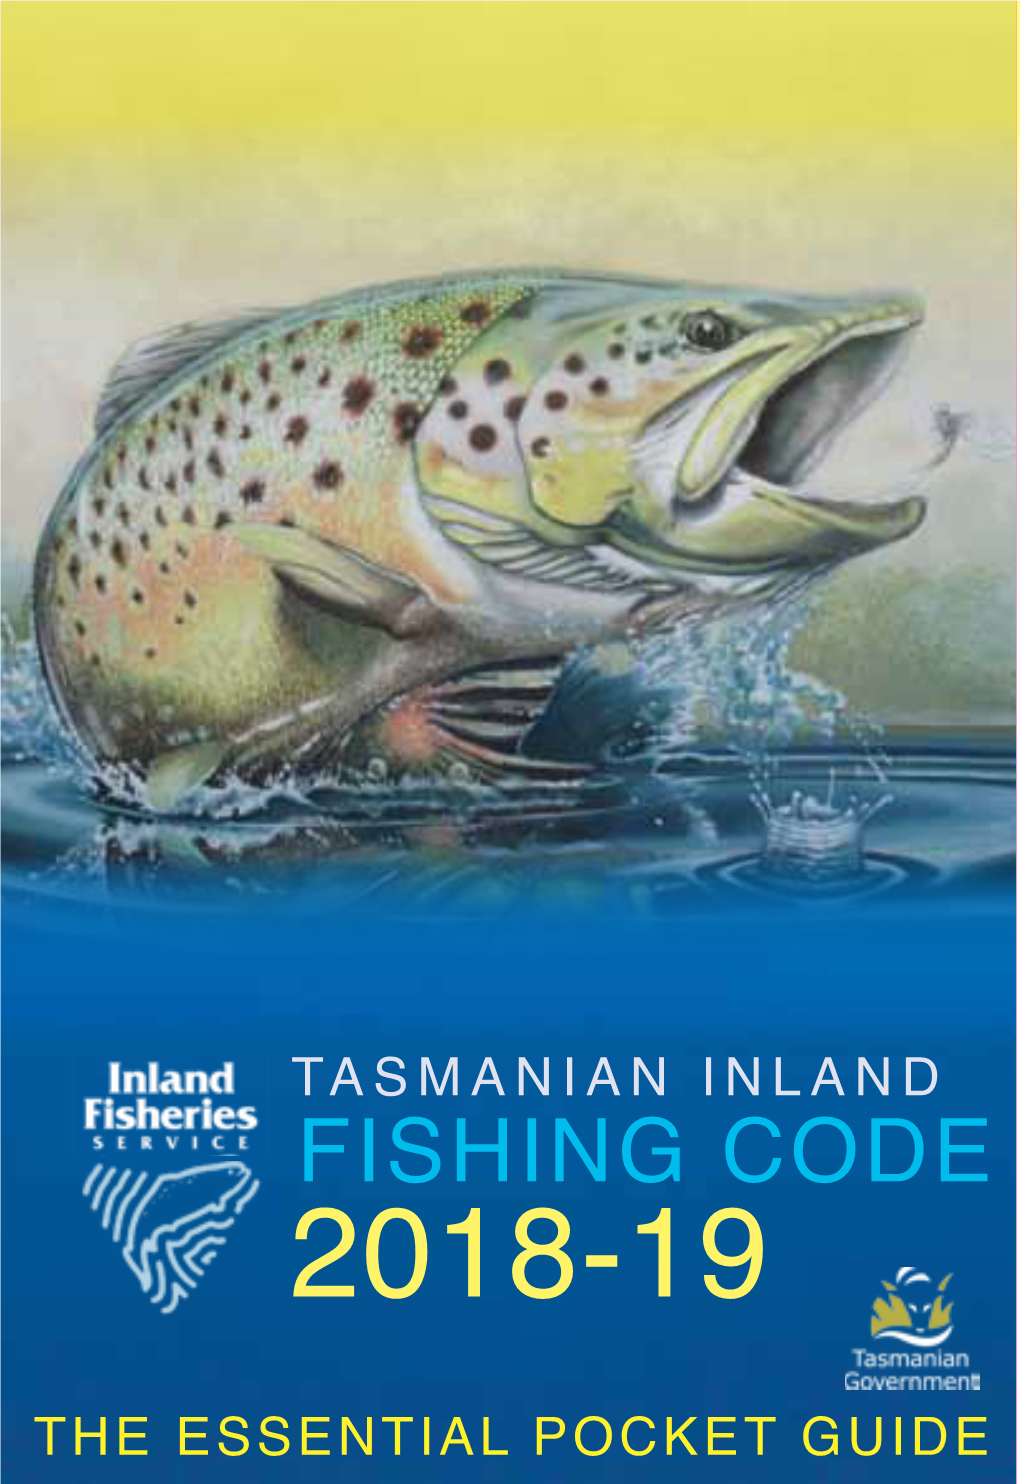 TASMANIAN INLAND FISHING CODE 2018-19 PAGE 2 Wear Your Life Jacket